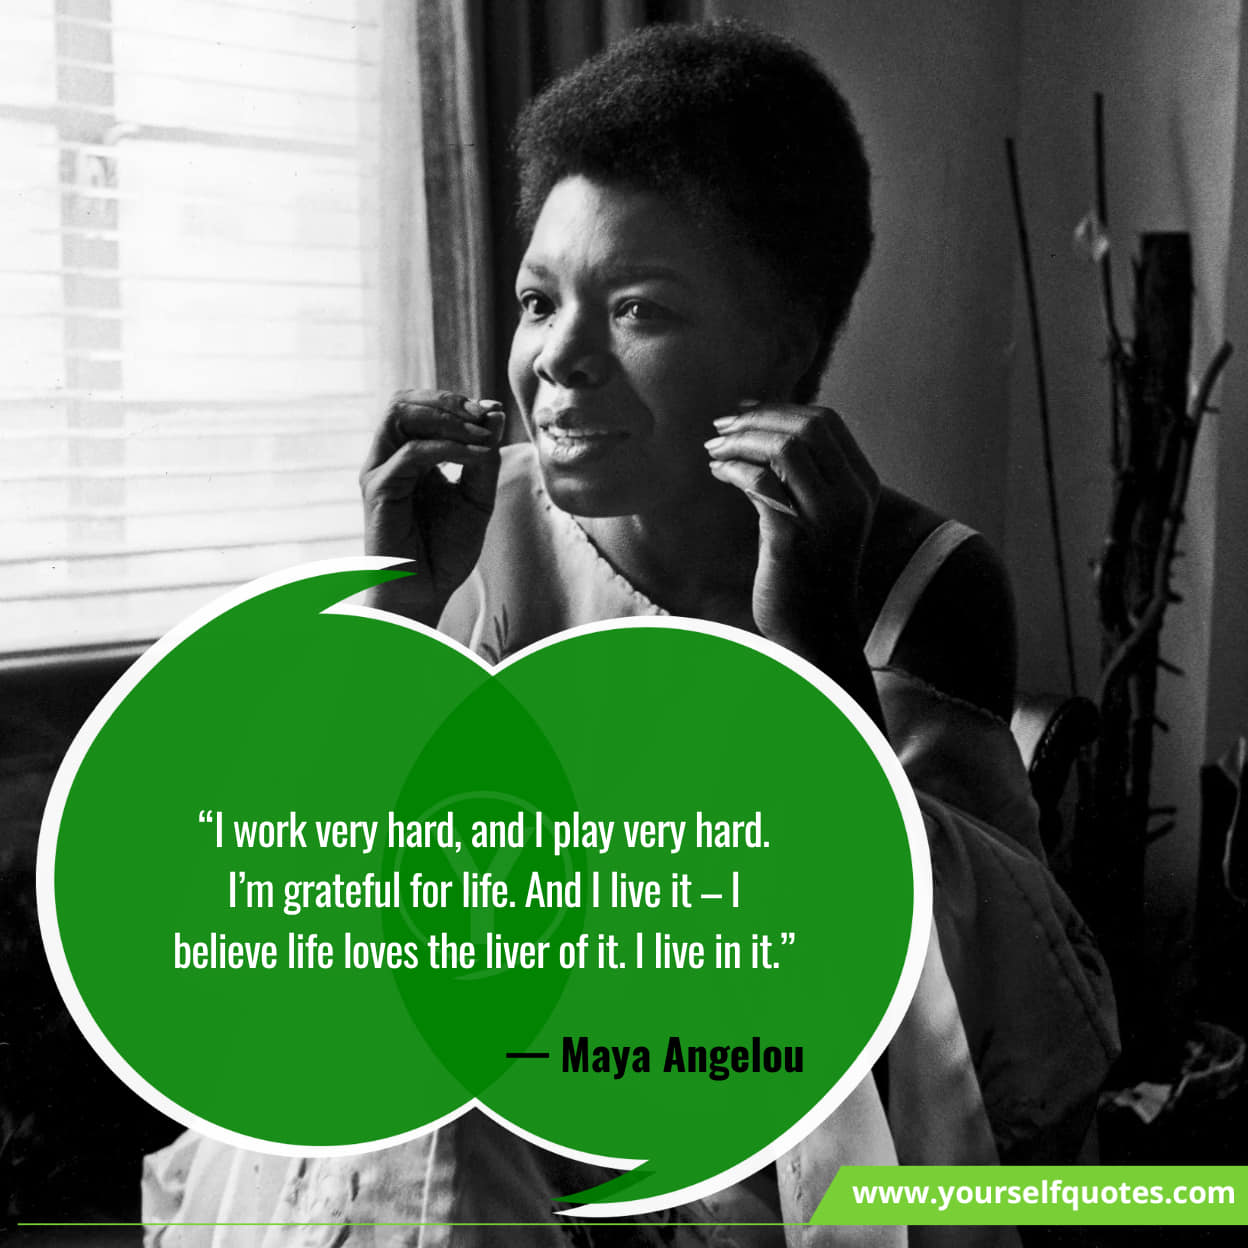 Maya Angelou on self-love and acceptanc